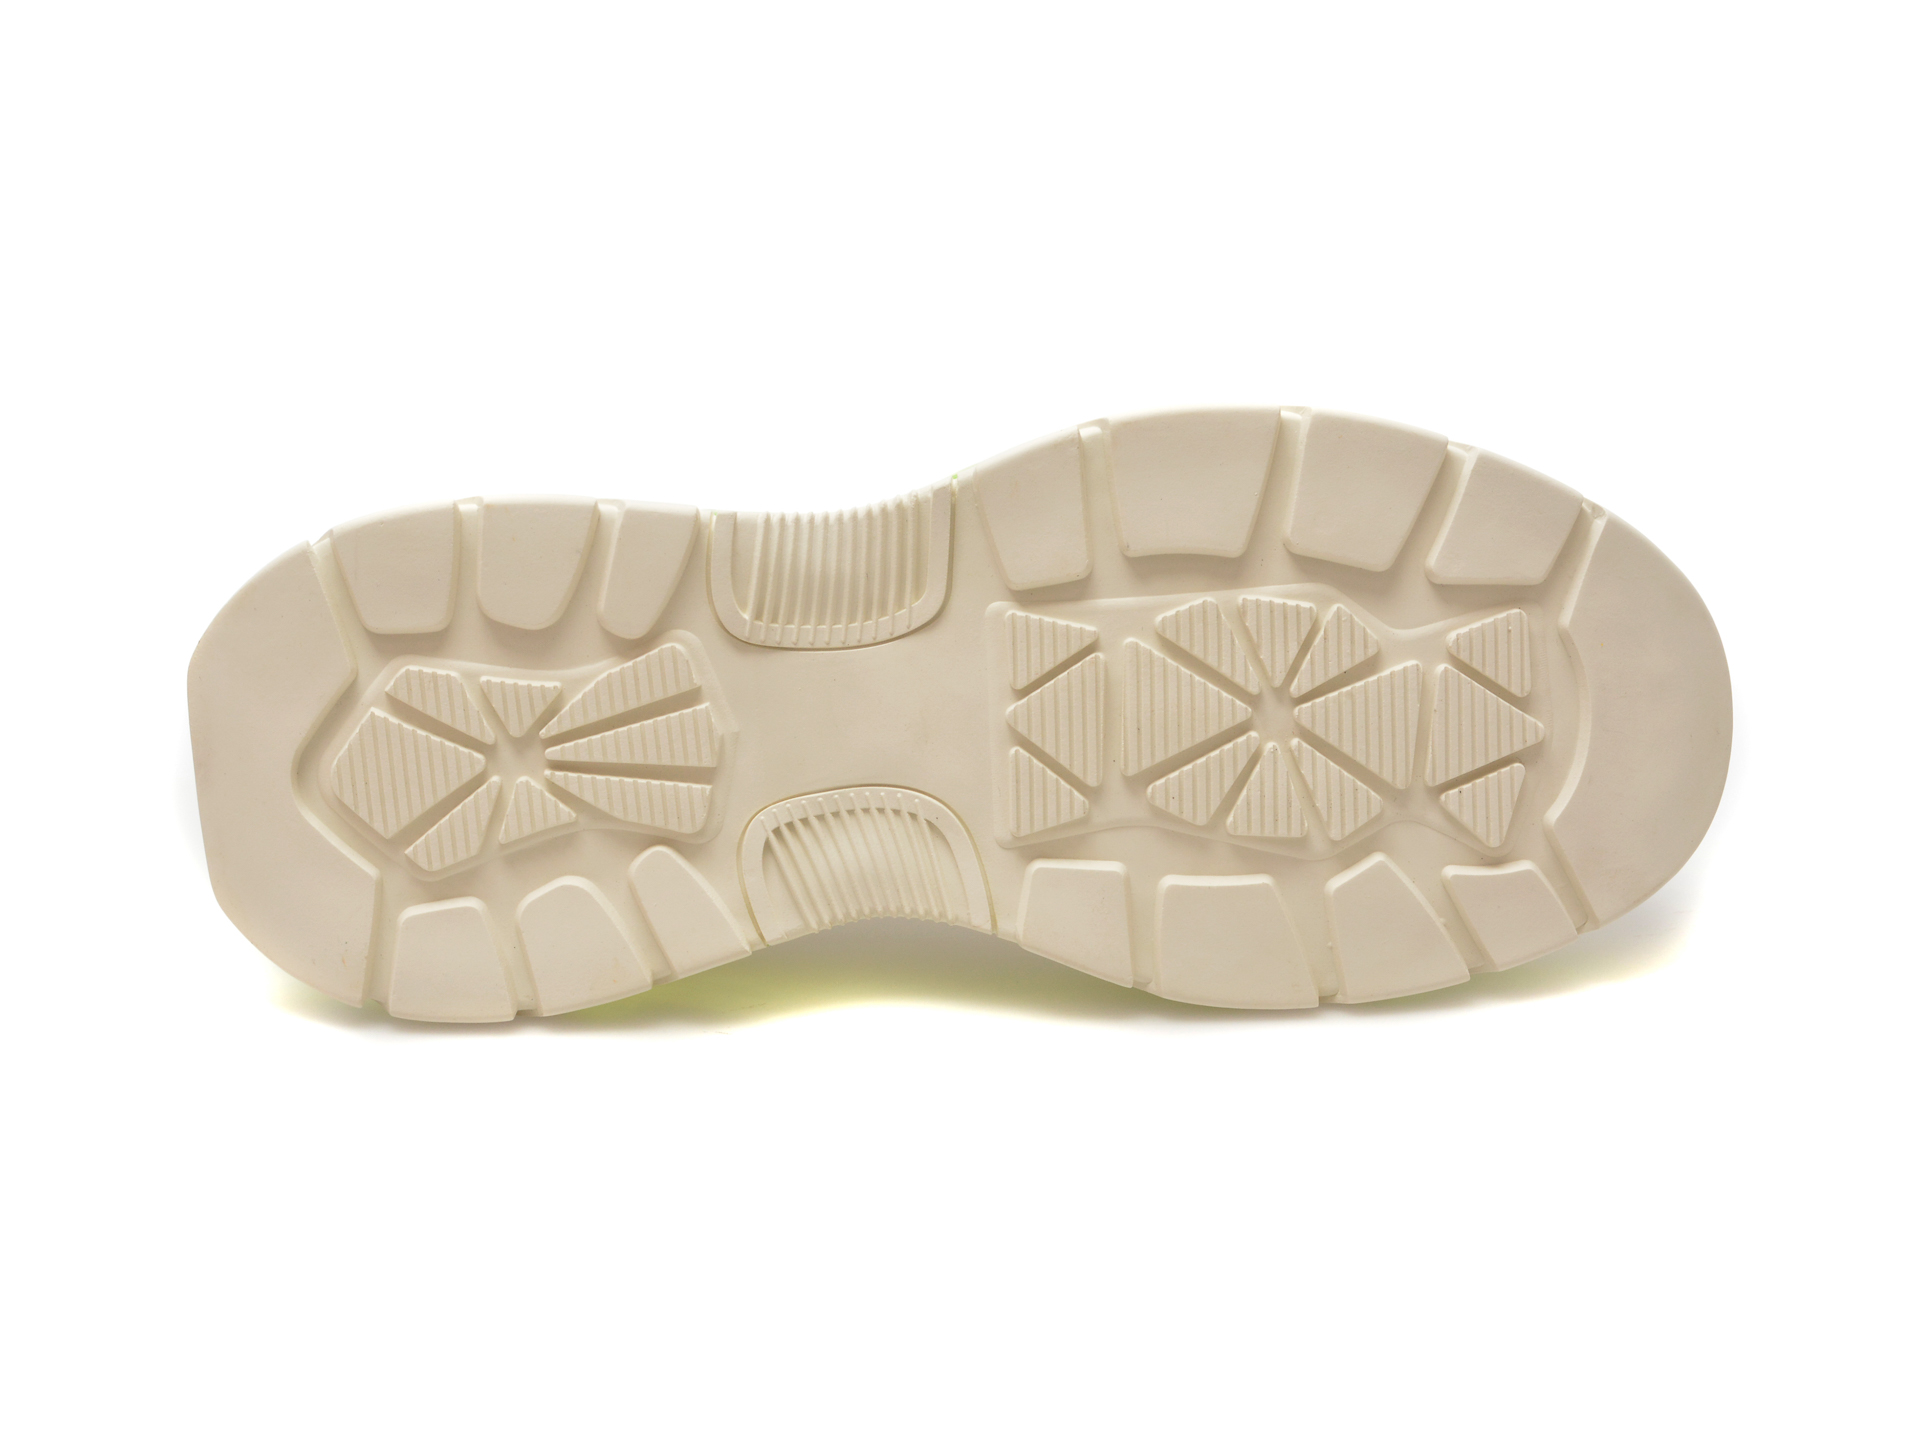 Pantofi sport GRYXX albi, 23059, din piele naturala